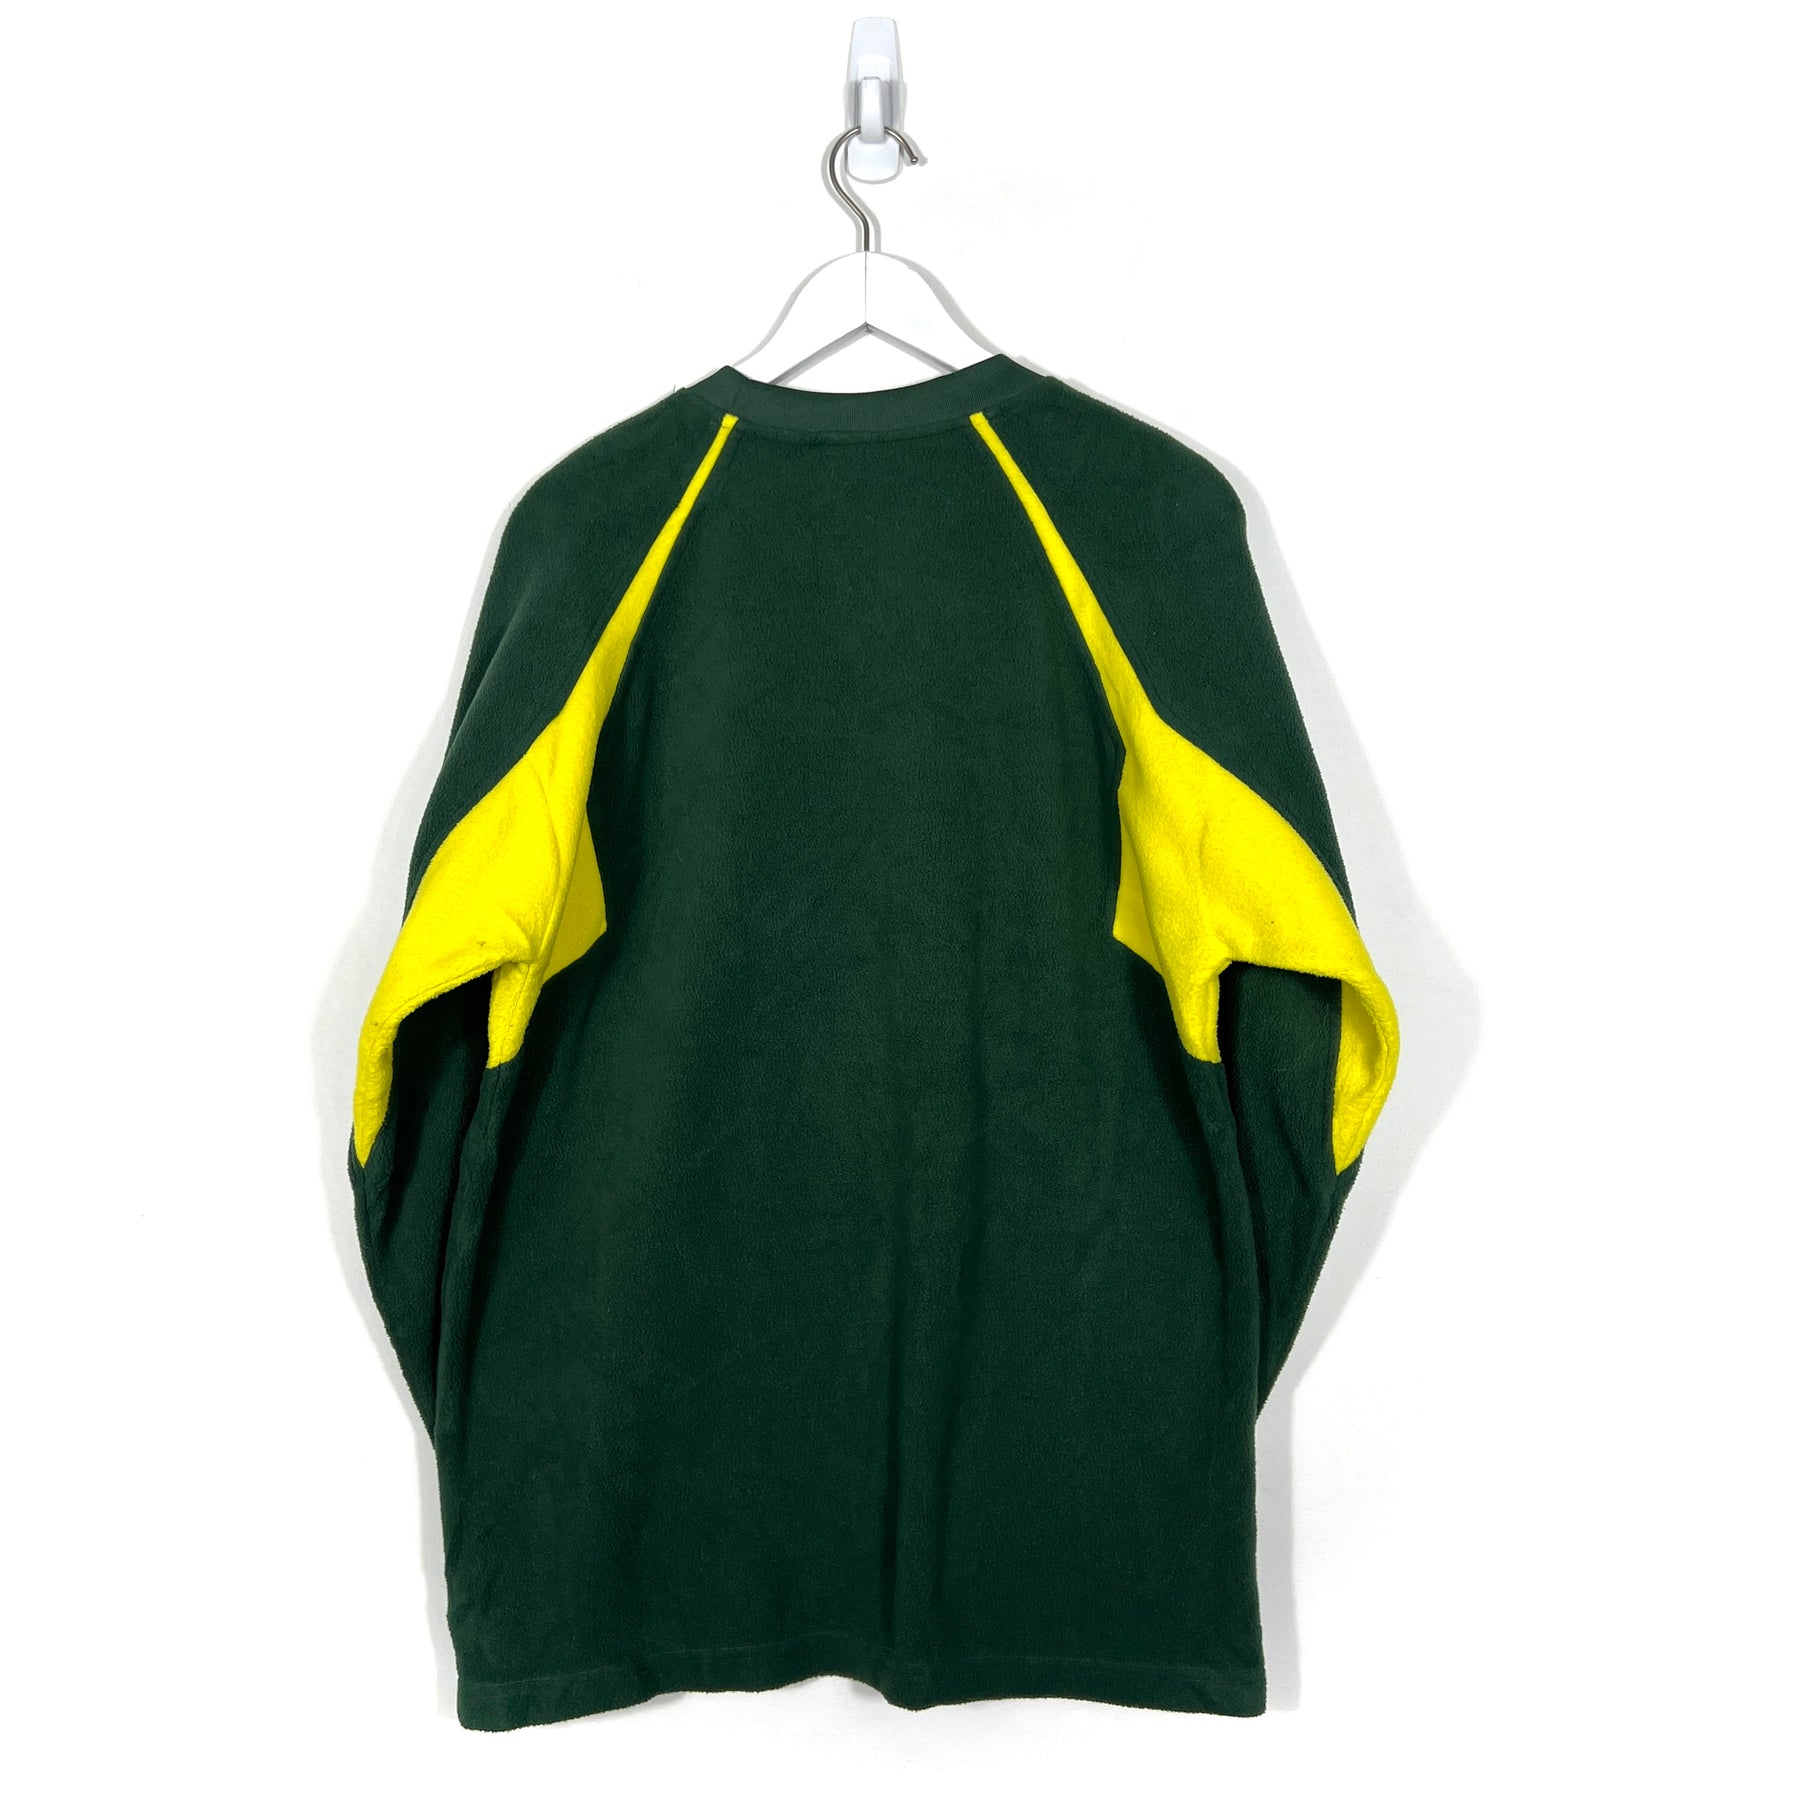 Vintage Nike University of Oregon Fleece Sweatshirt - Men's XL